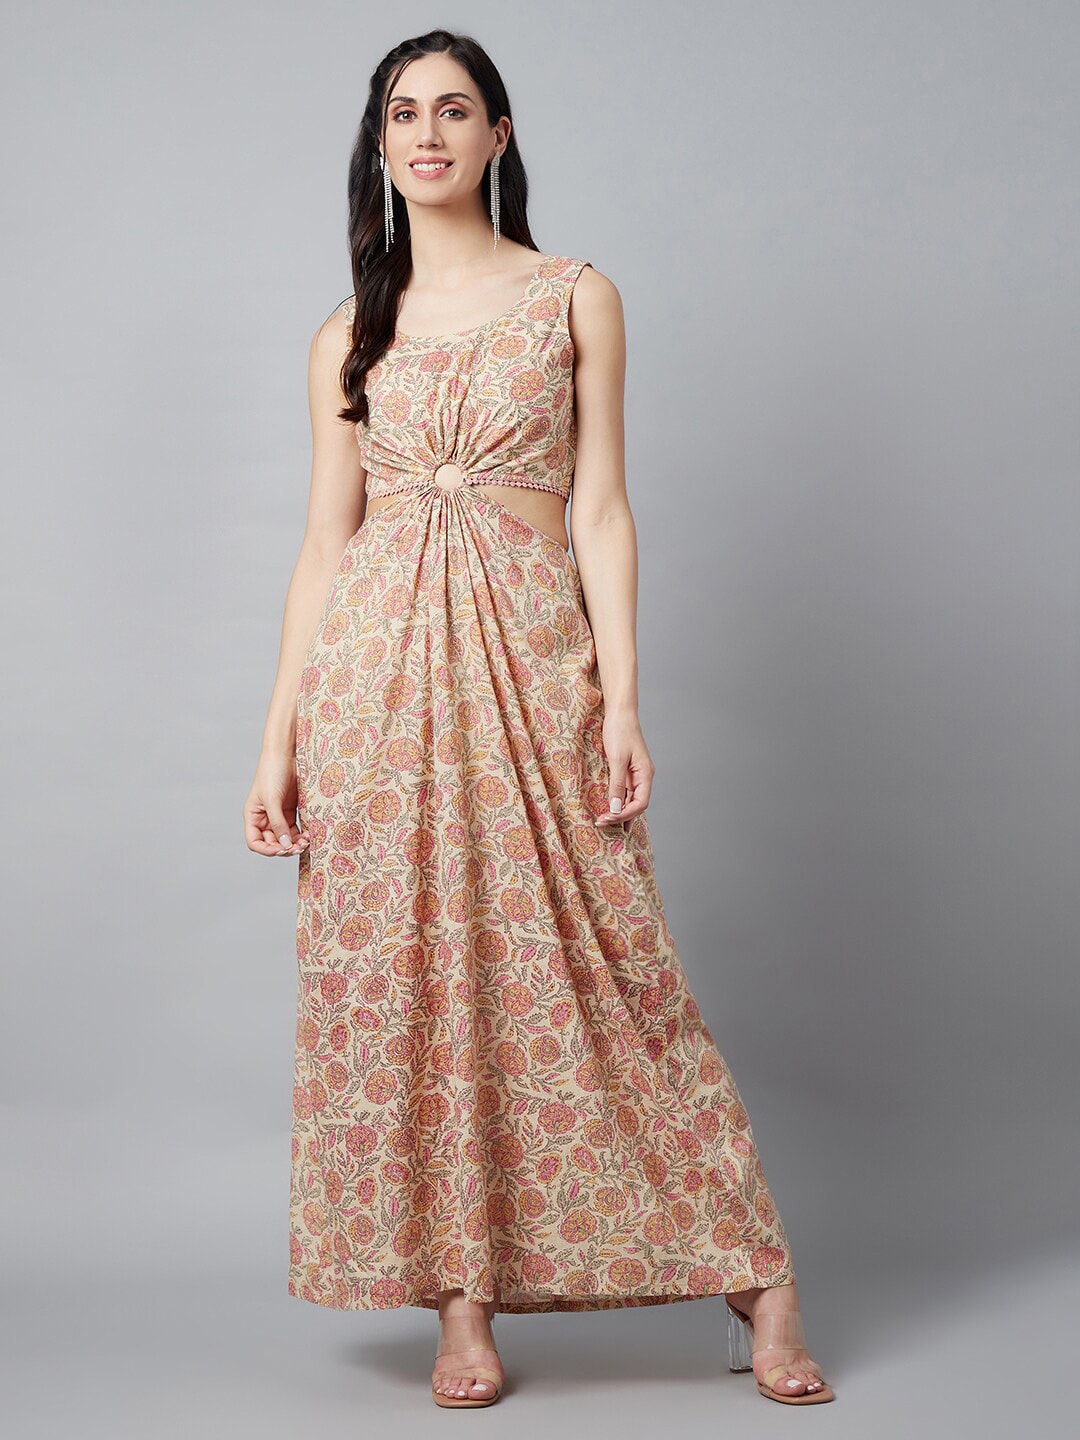 AKS Cream-Coloured Floral Print Maxi Dress Price in India